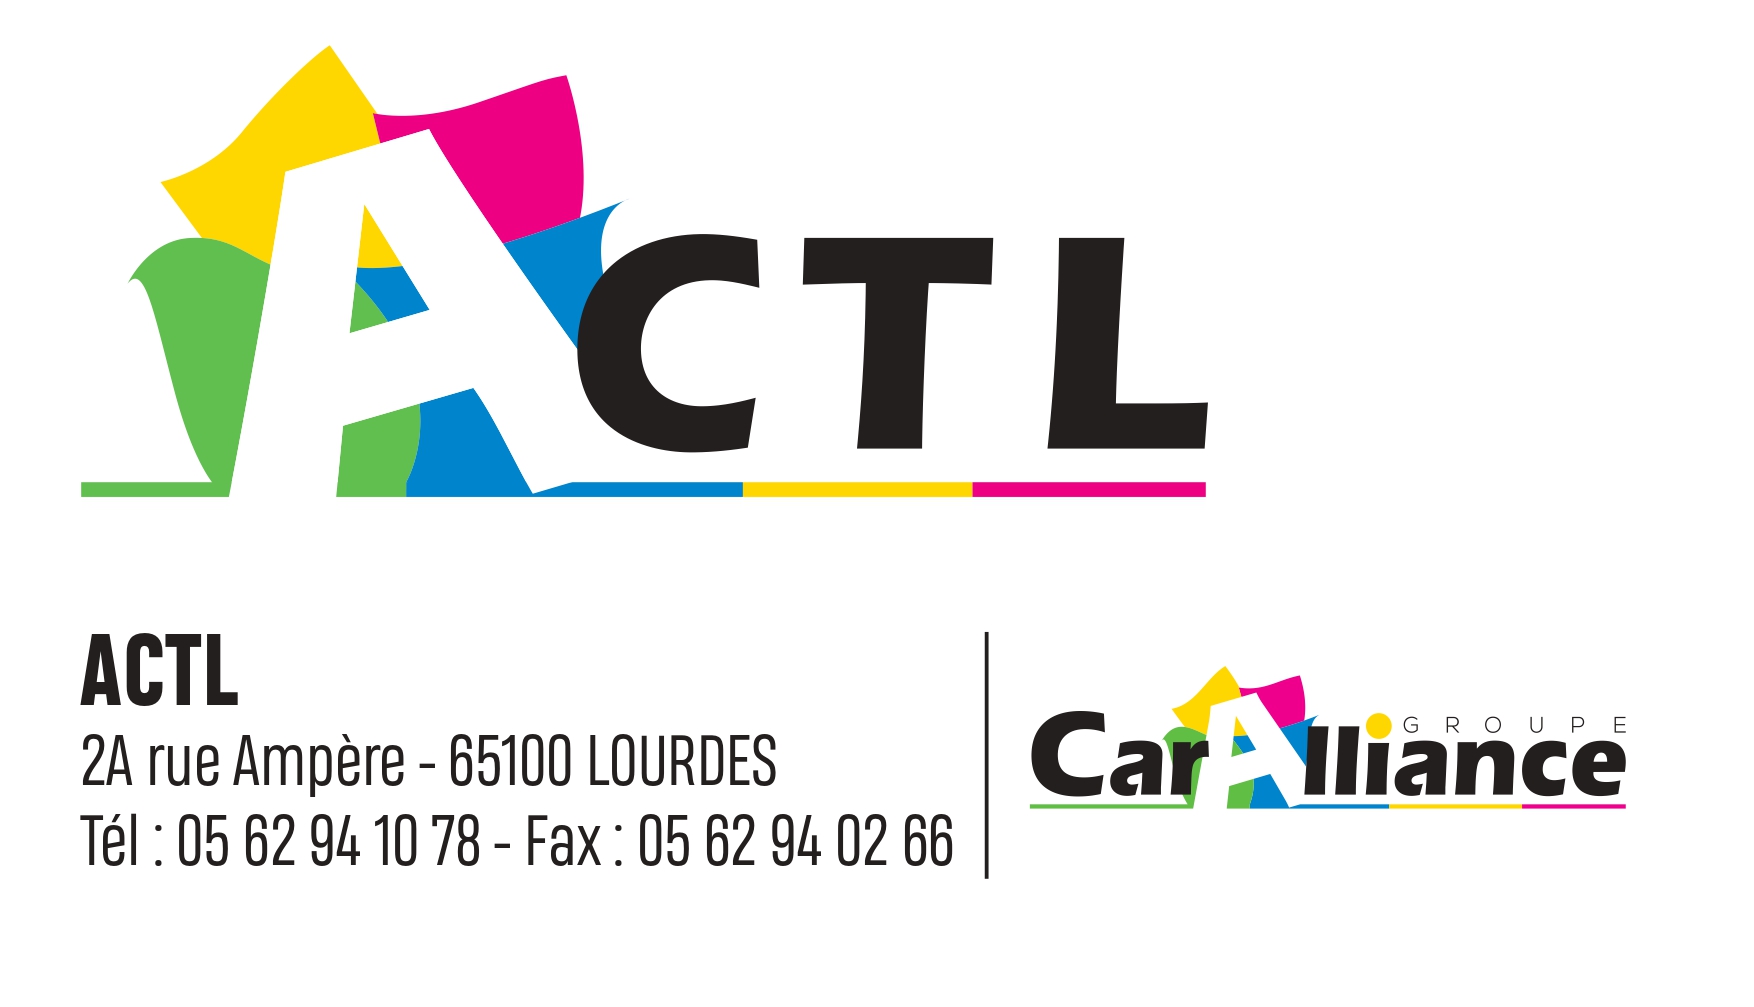 ACTL Caralliance 